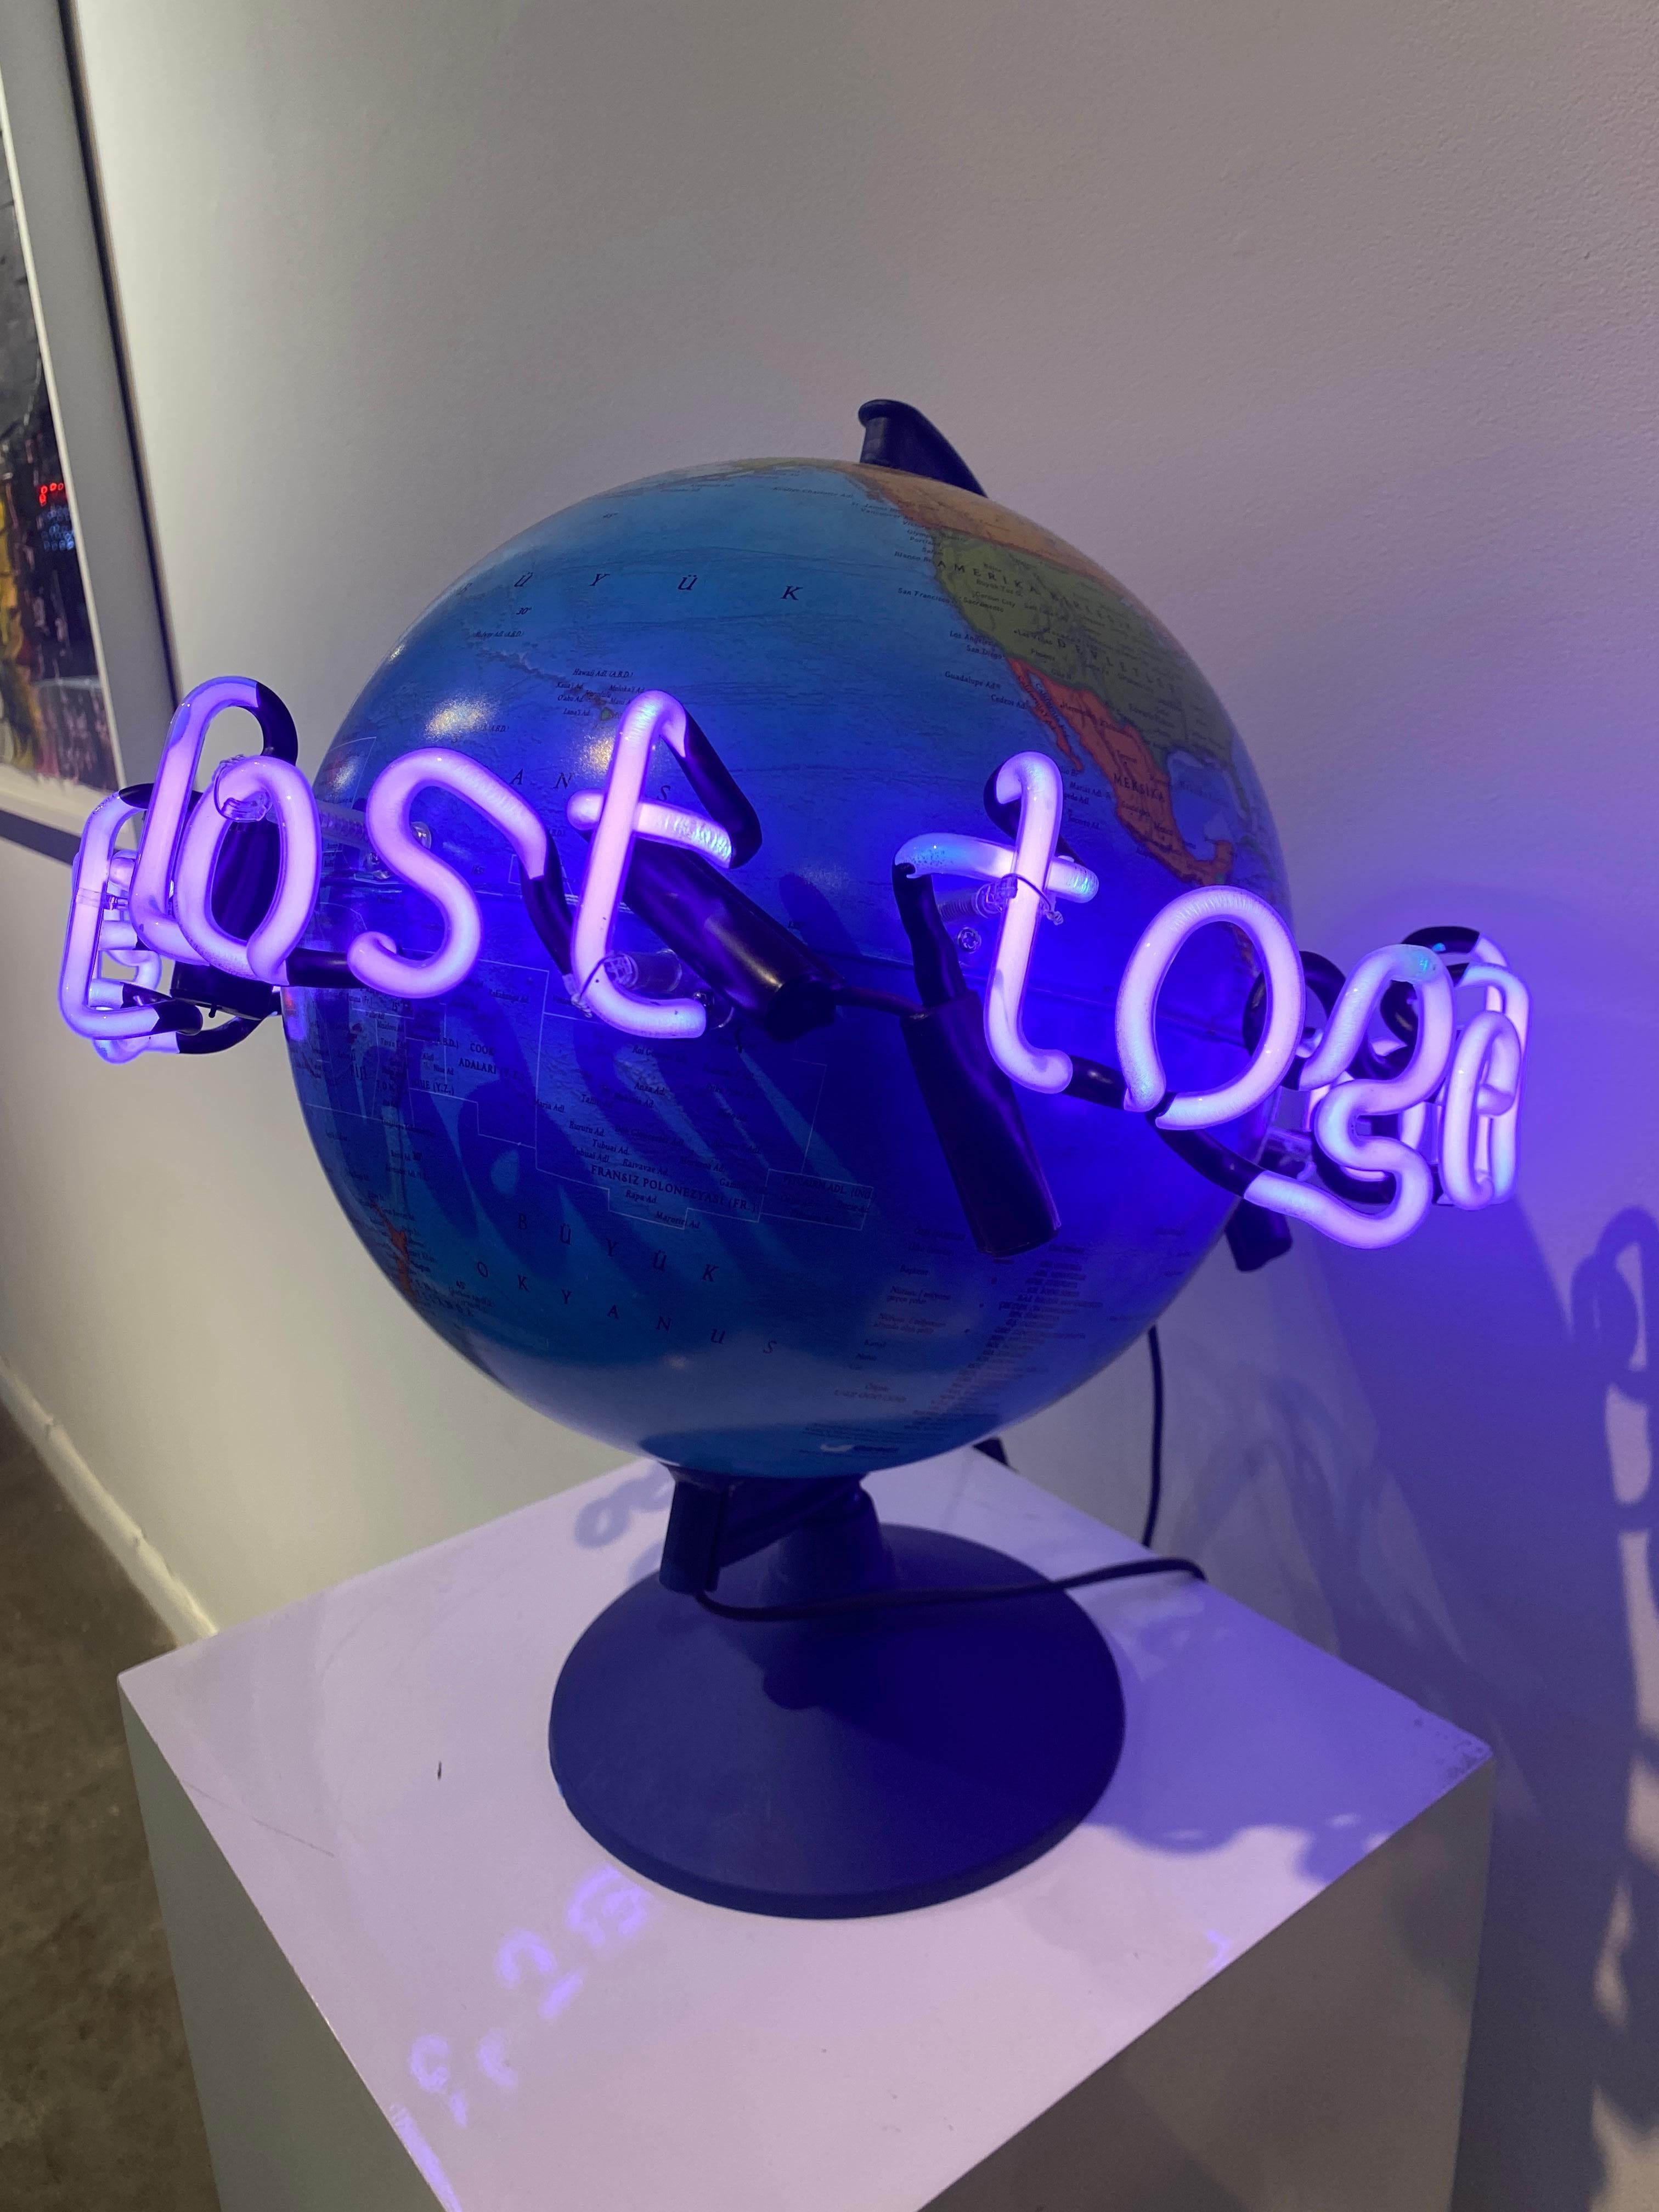 Let's Get Lost Together - Purple Still-Life Sculpture by Ardan Ozmenoglu